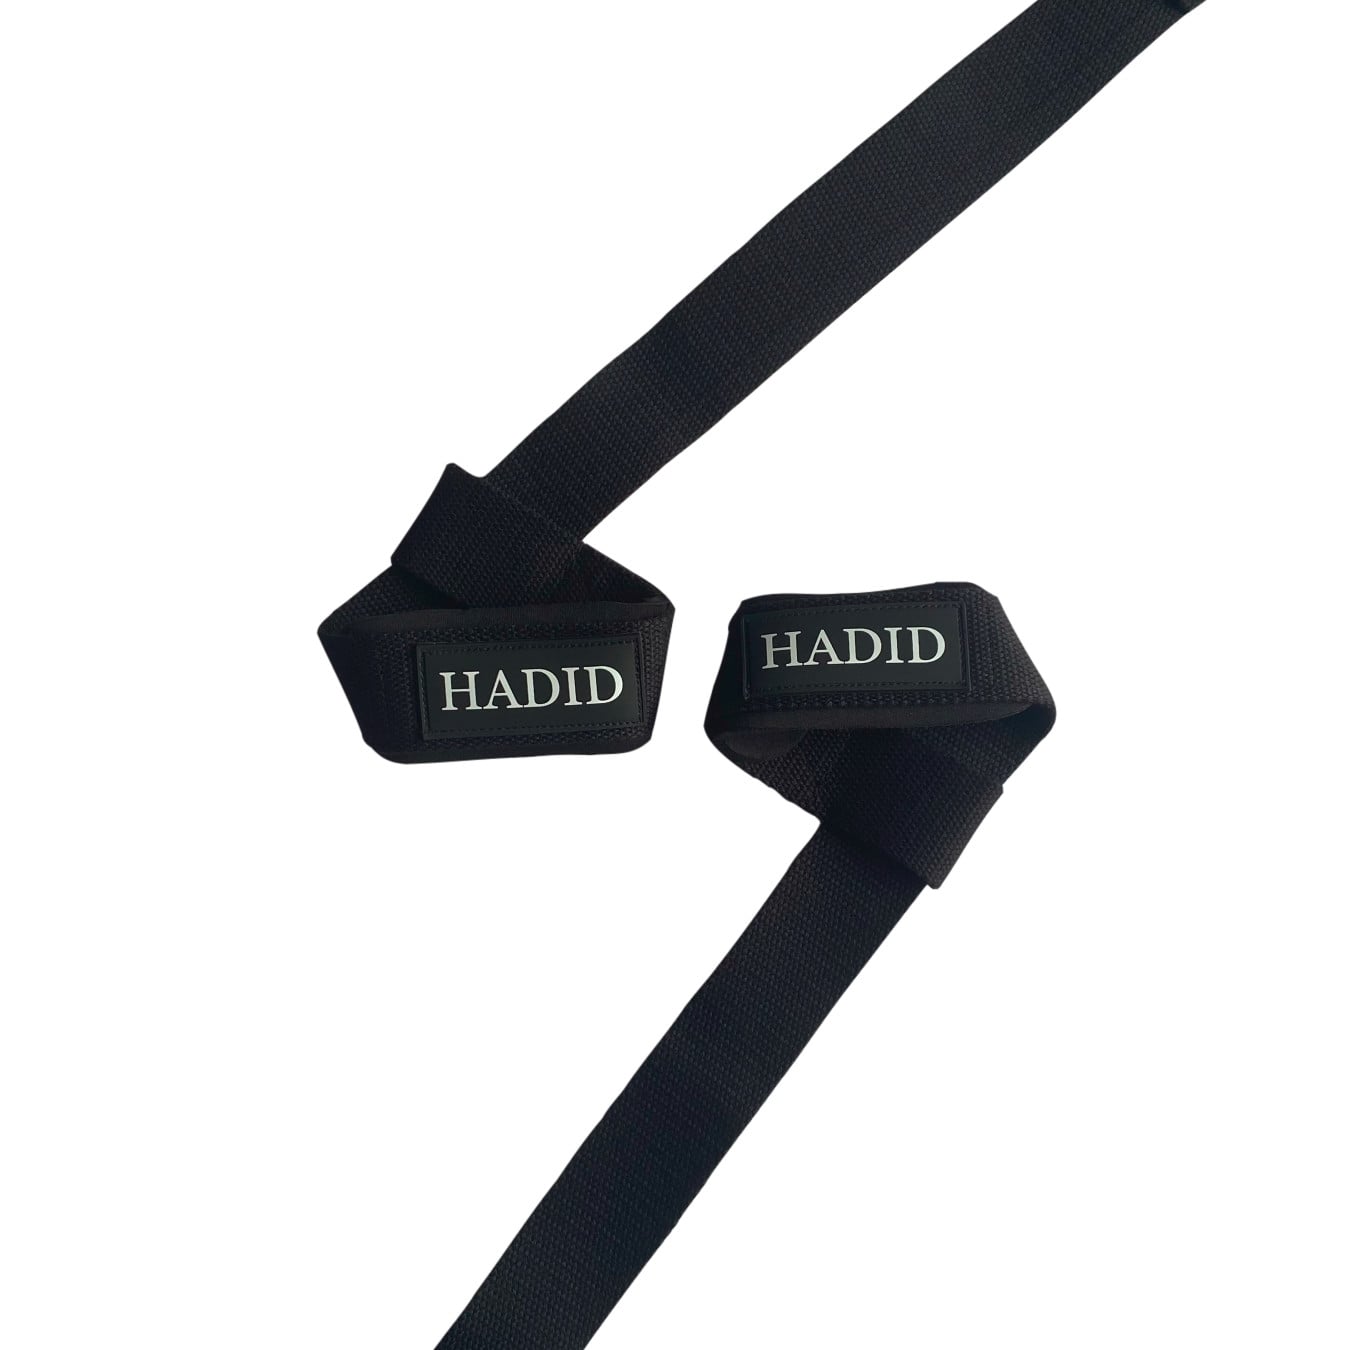 Hadid Lifting Straps Black Full Size